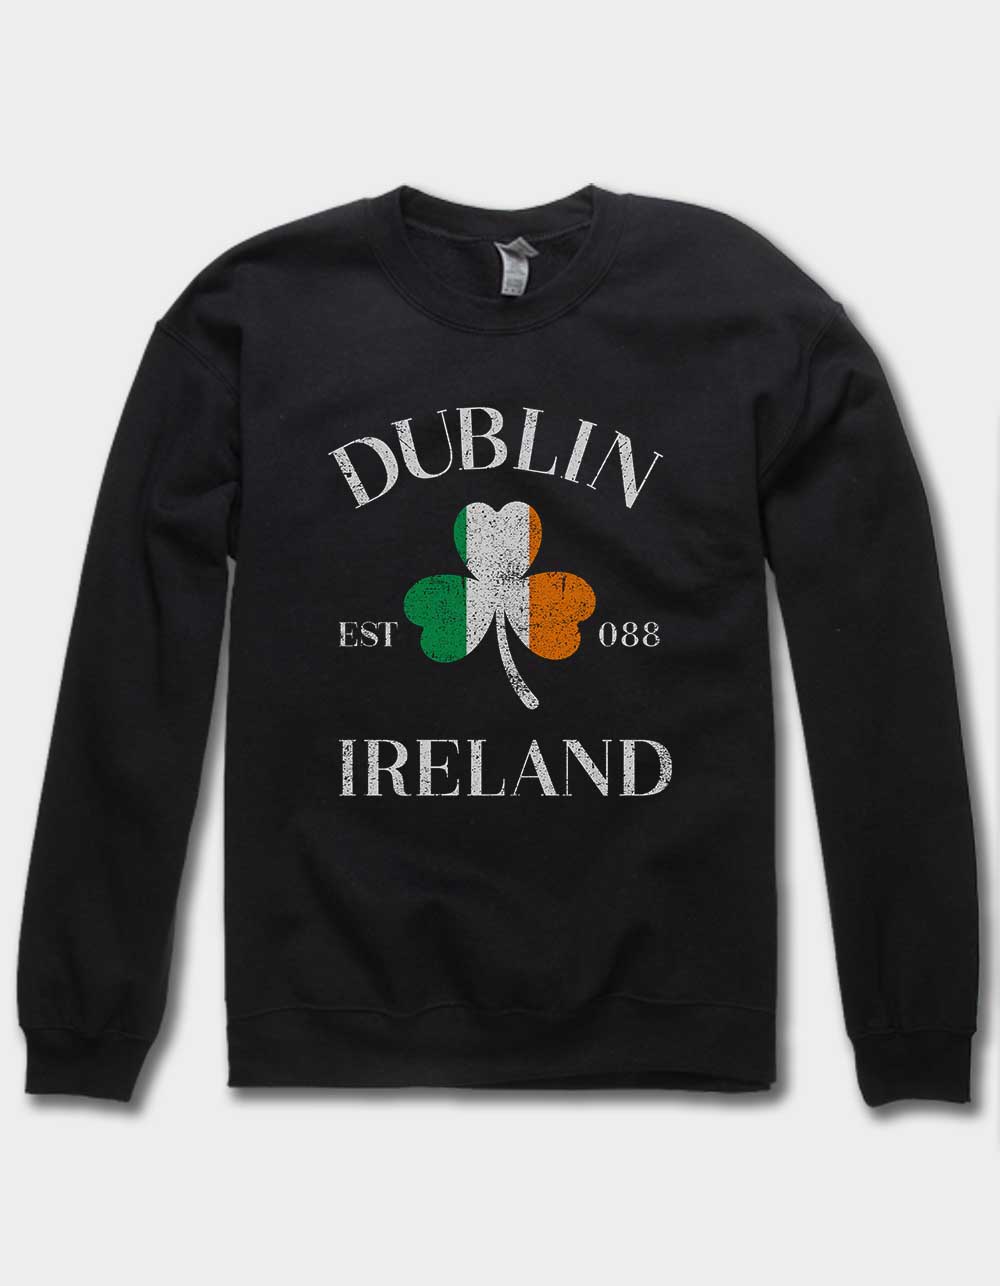 IRELAND Dublin Clover Flag Distressed Unisex Crewneck Sweatshirt